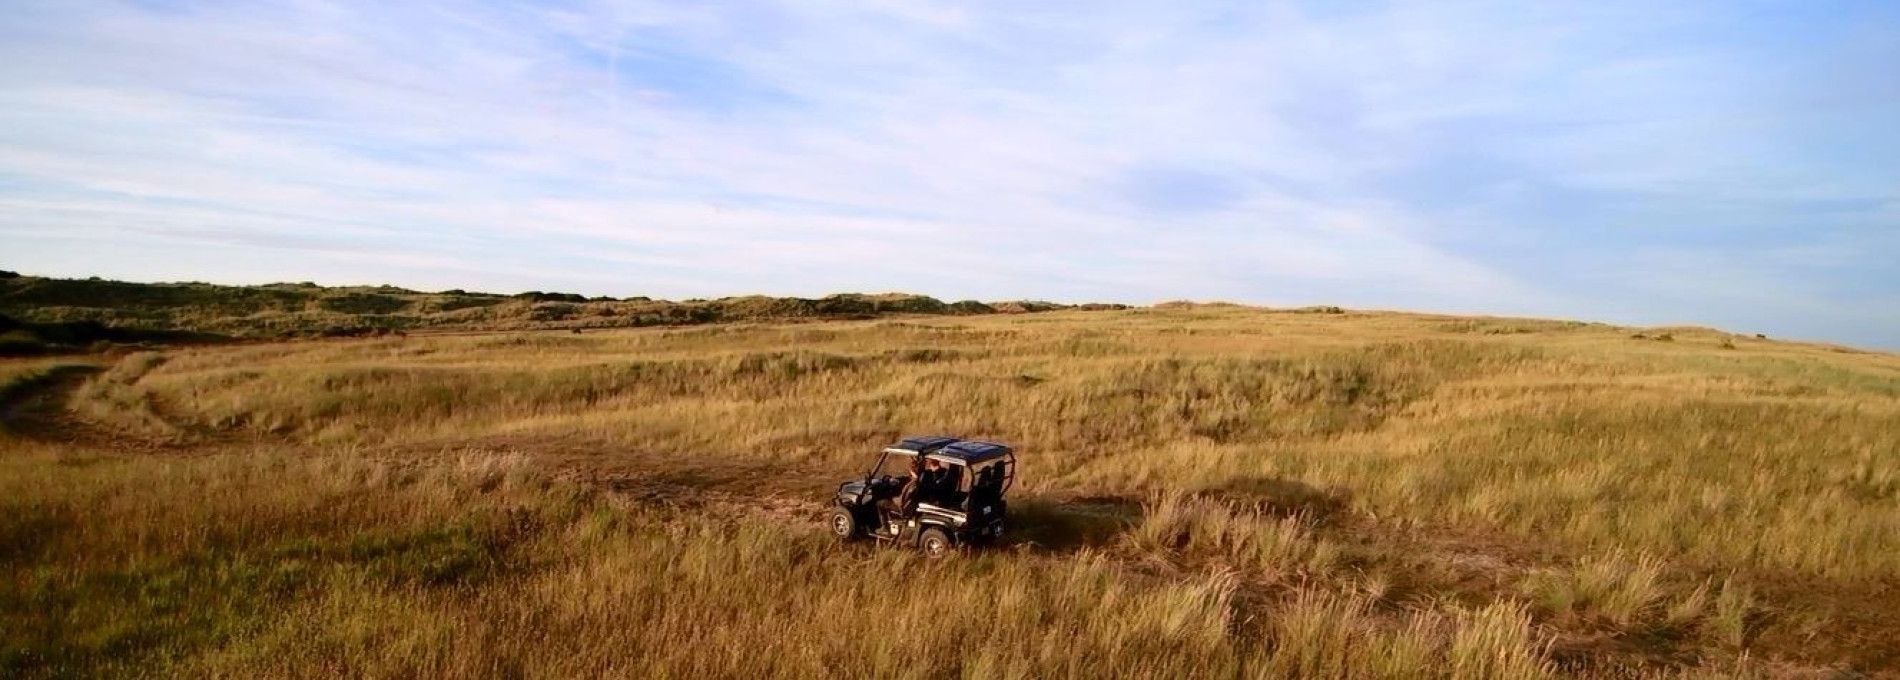 Eco safari - VVV Ameland